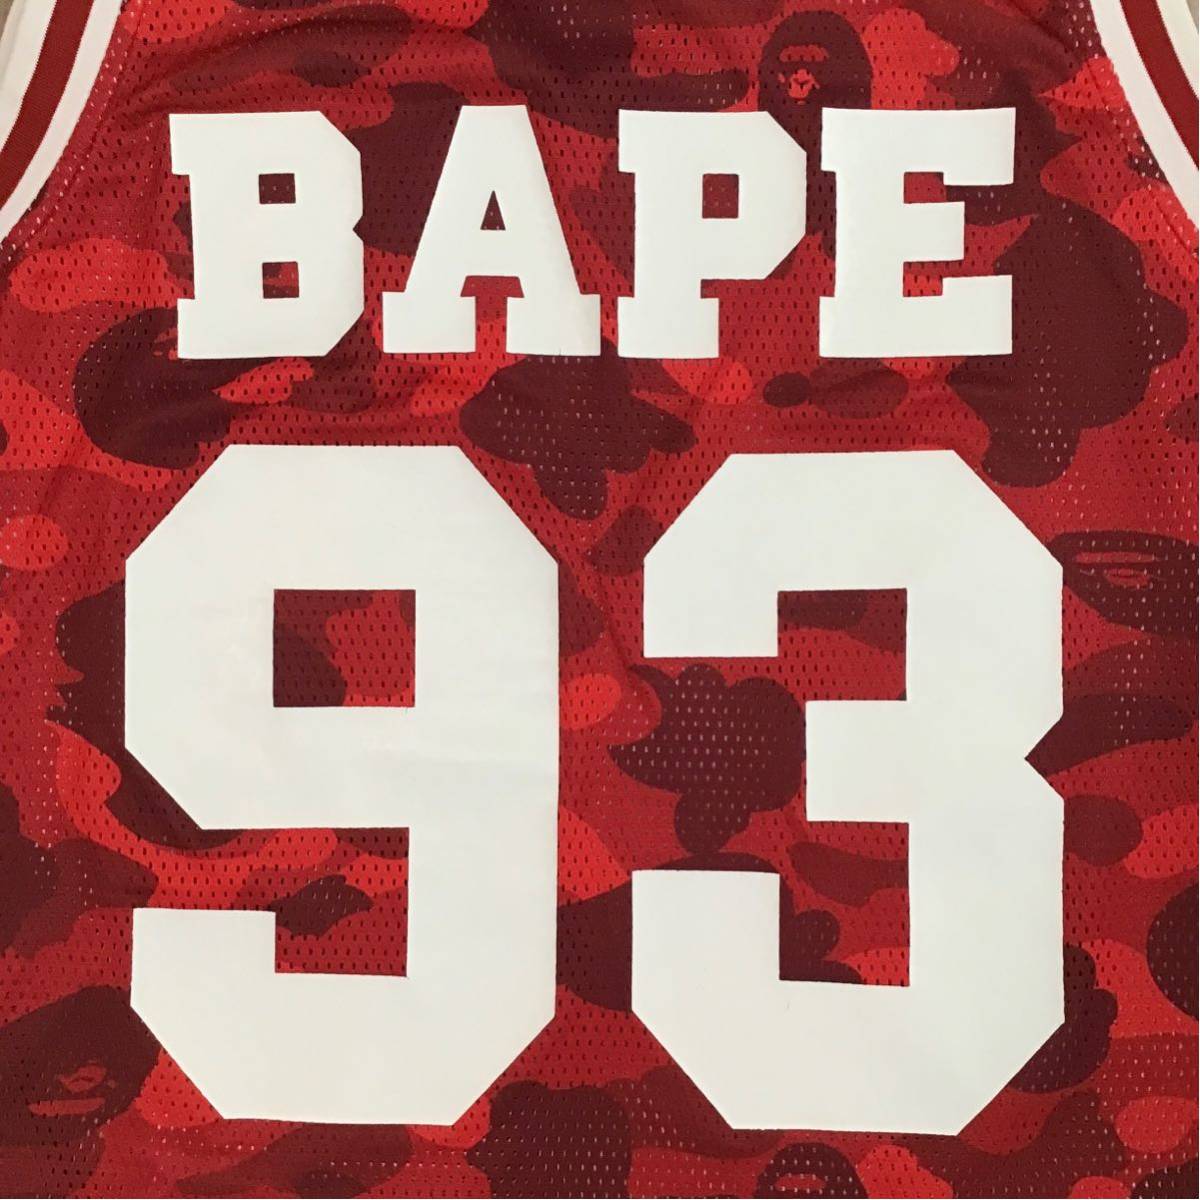 champion × BAPE basketball tank top Lサイズ red camo a bathing ape BAPE STAR タンクトップ エイプ ベイプ チャンピオン 迷彩 m50_画像4